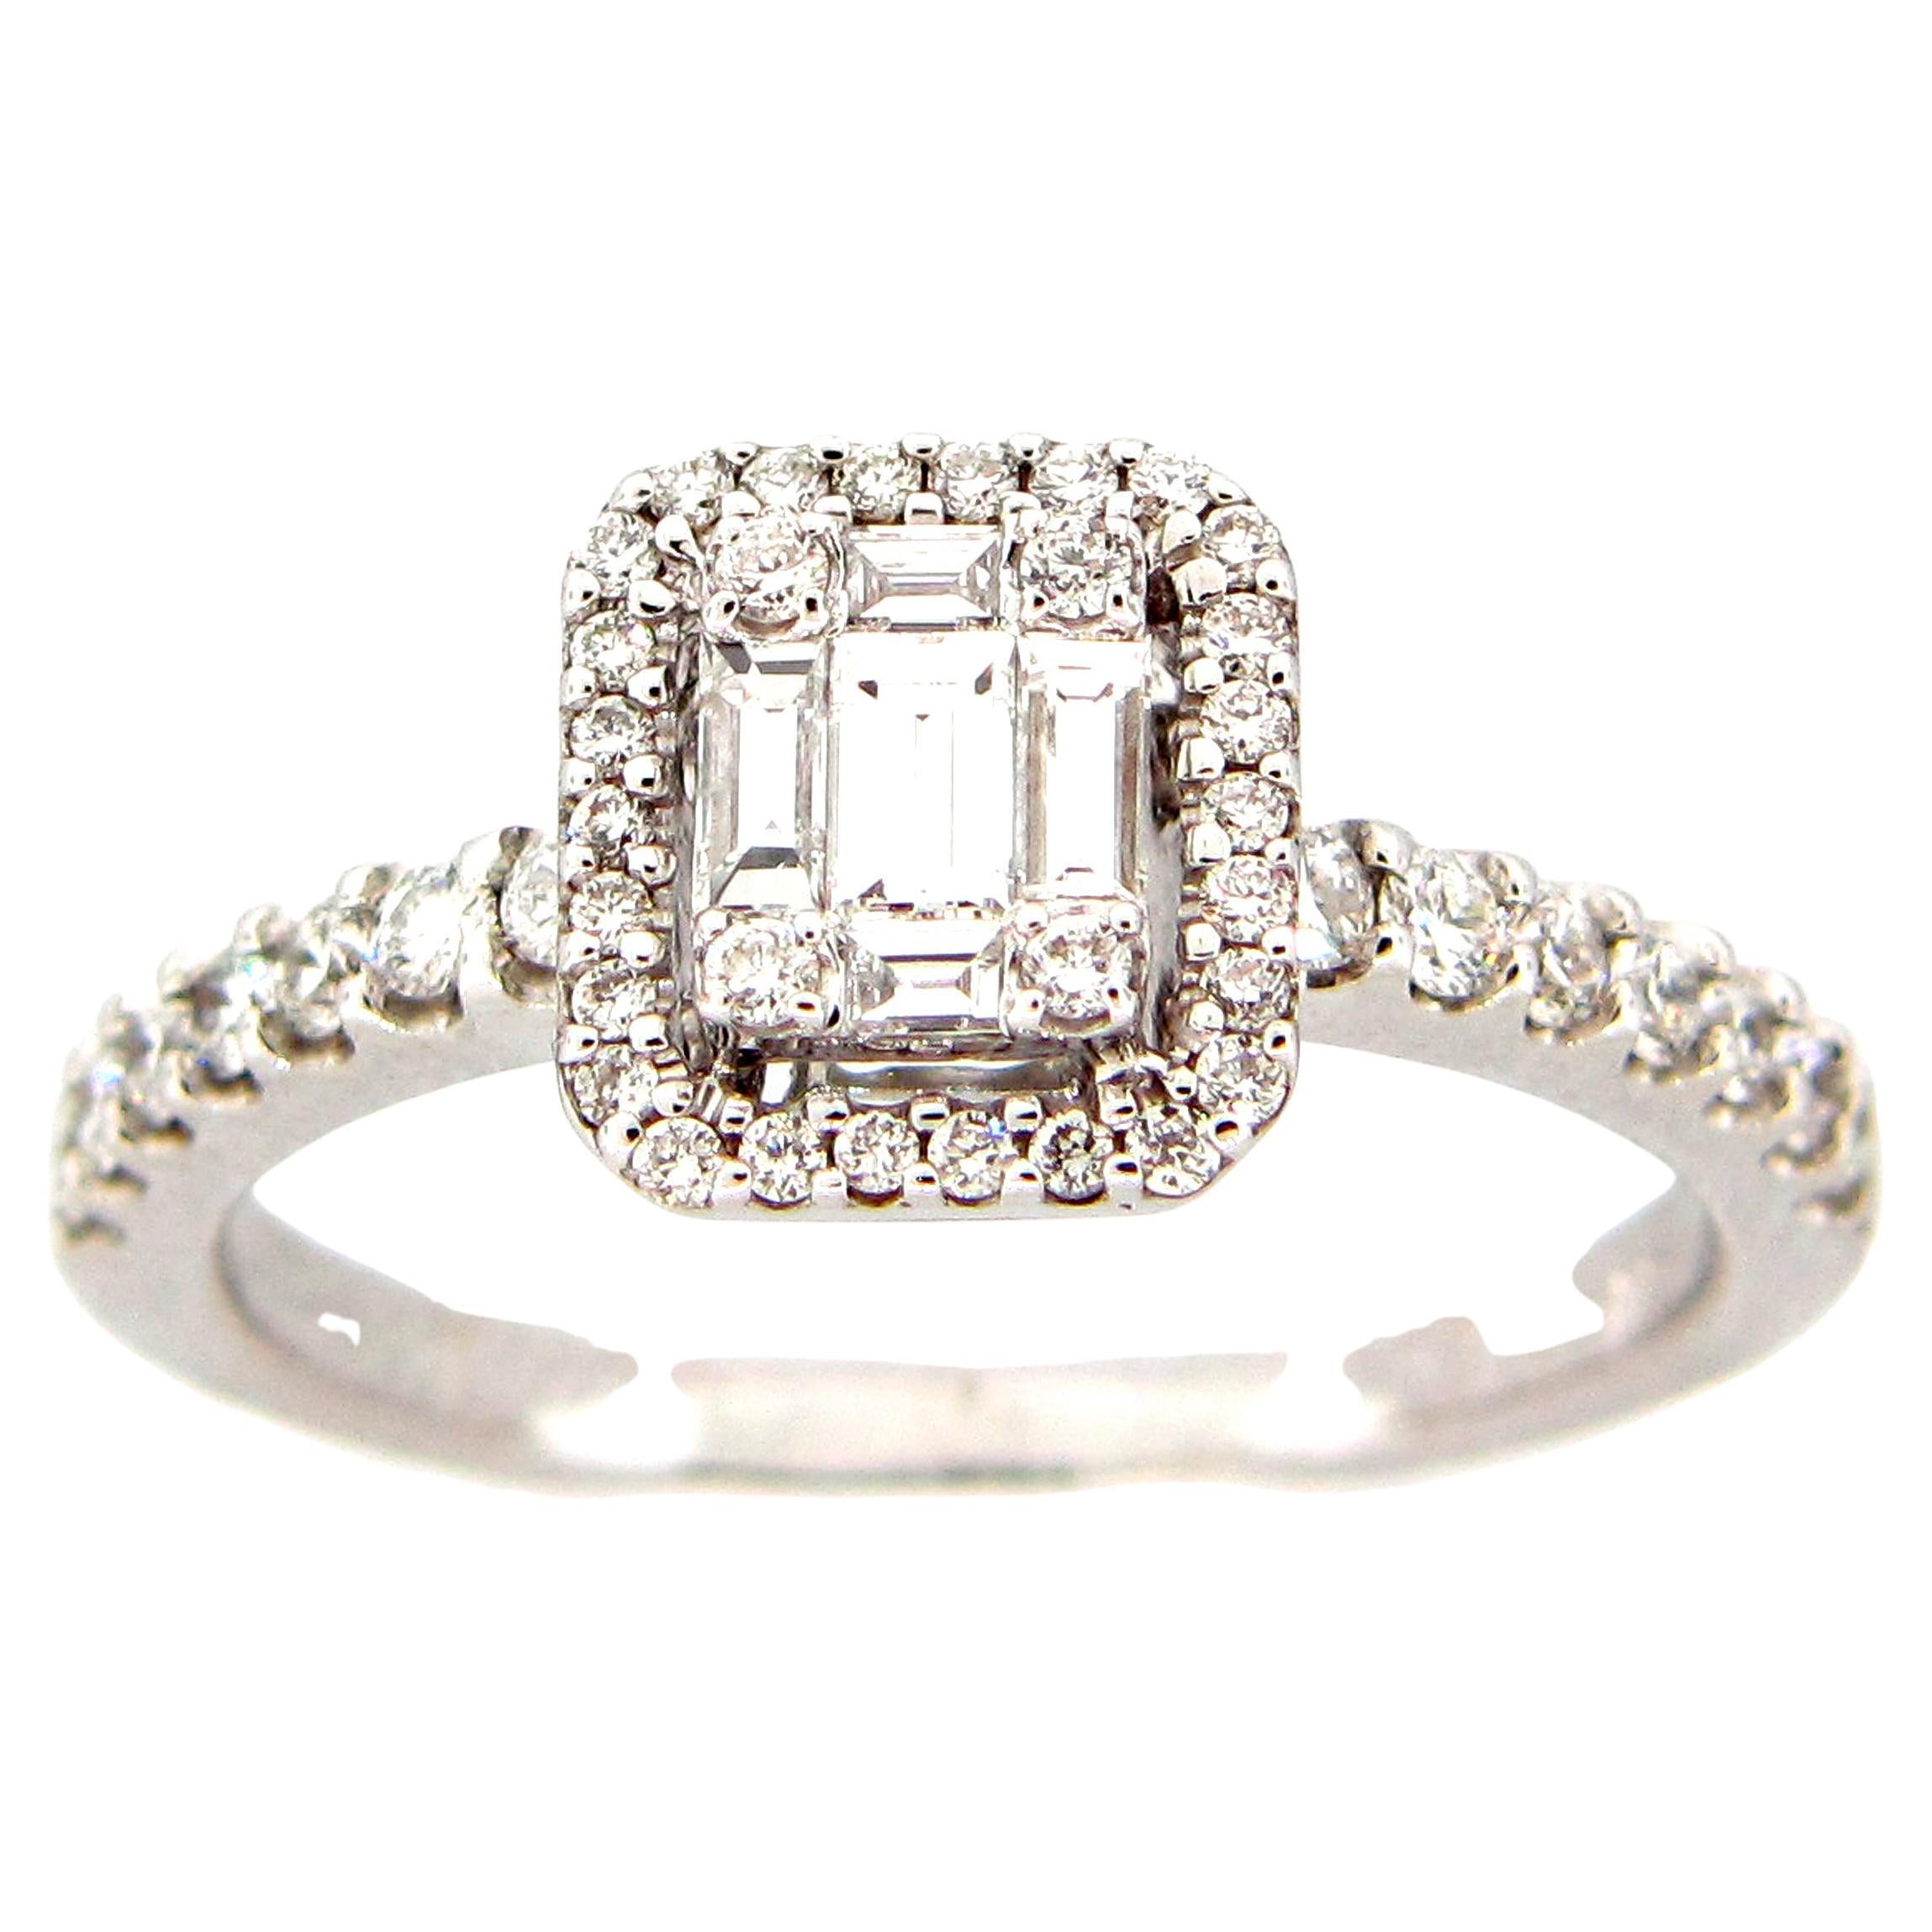 0.61 Carat Diamond Emerald Cut Cluster Ring